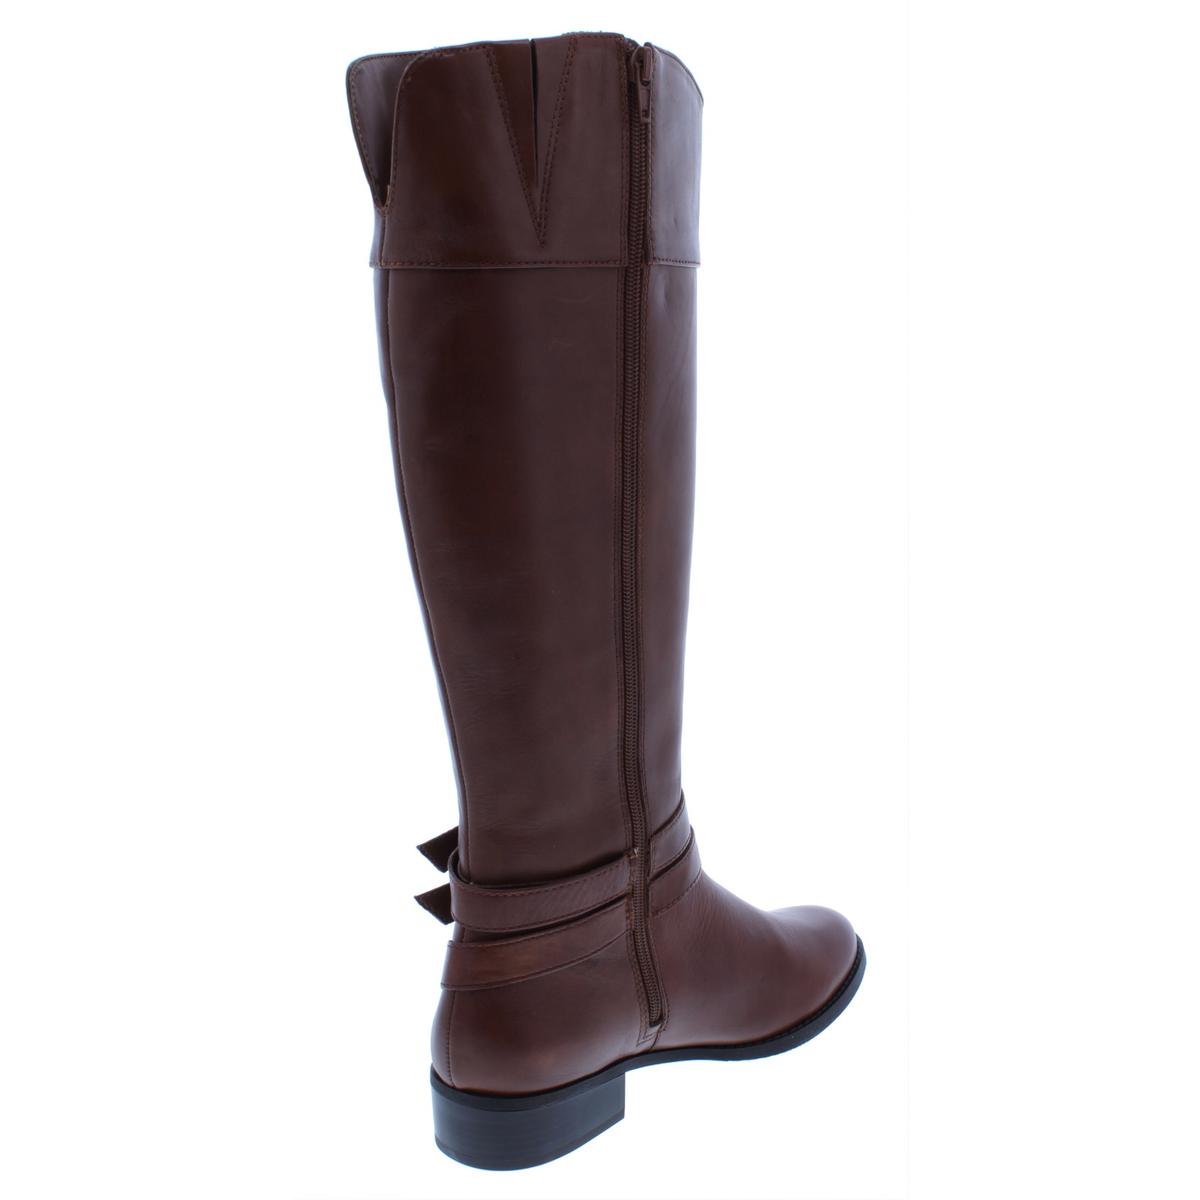 BHFO 5360 Alfani Womens Briaah Brown Leather Riding Boots Shoes 5.5 Medium B,M